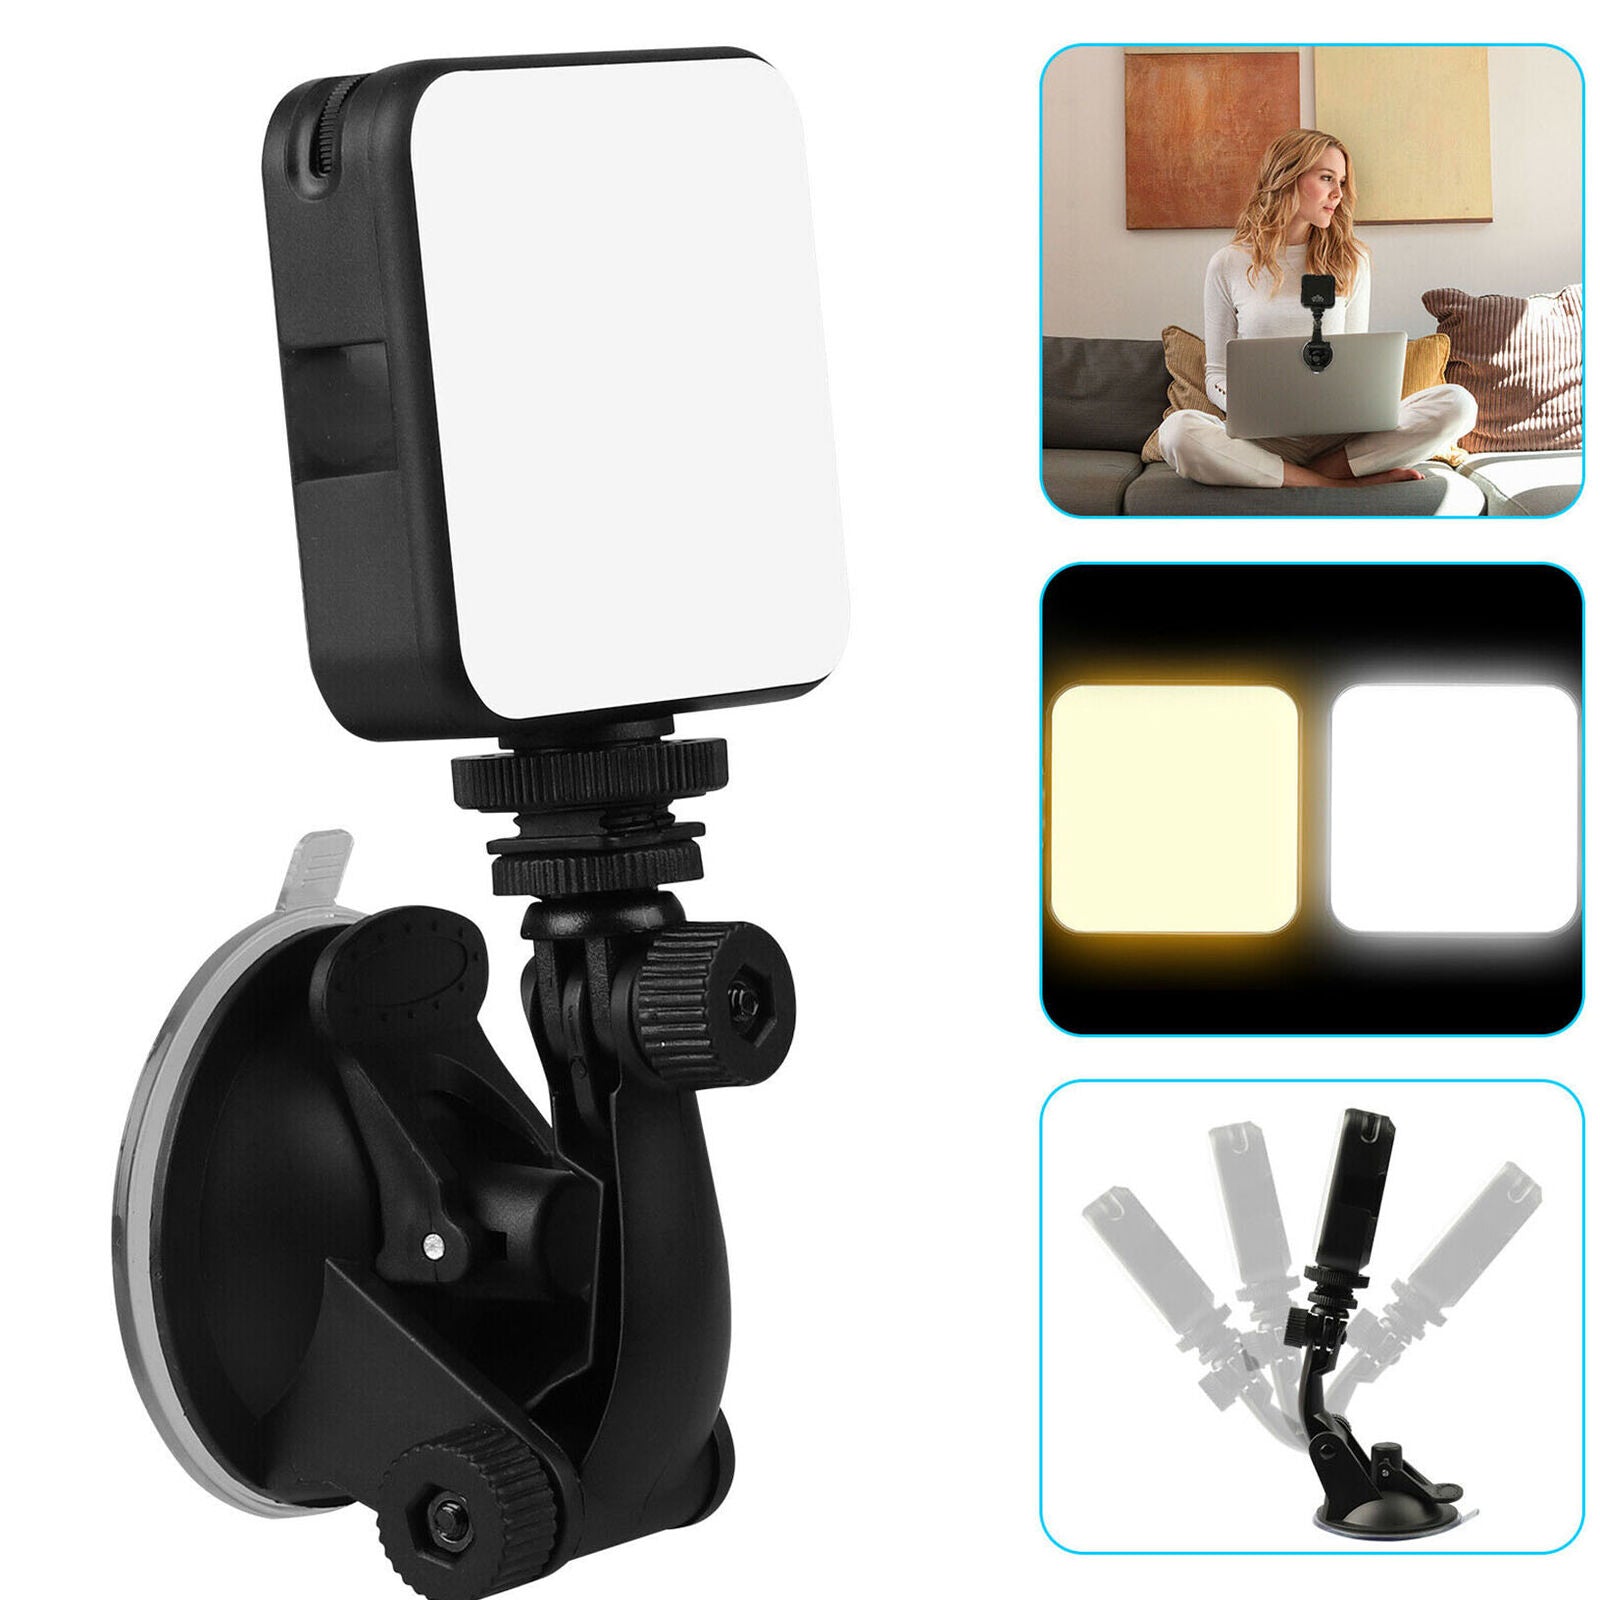 360Â° Video Conference Lighting Kit USB LED Light Adjustable for YouTube Camera